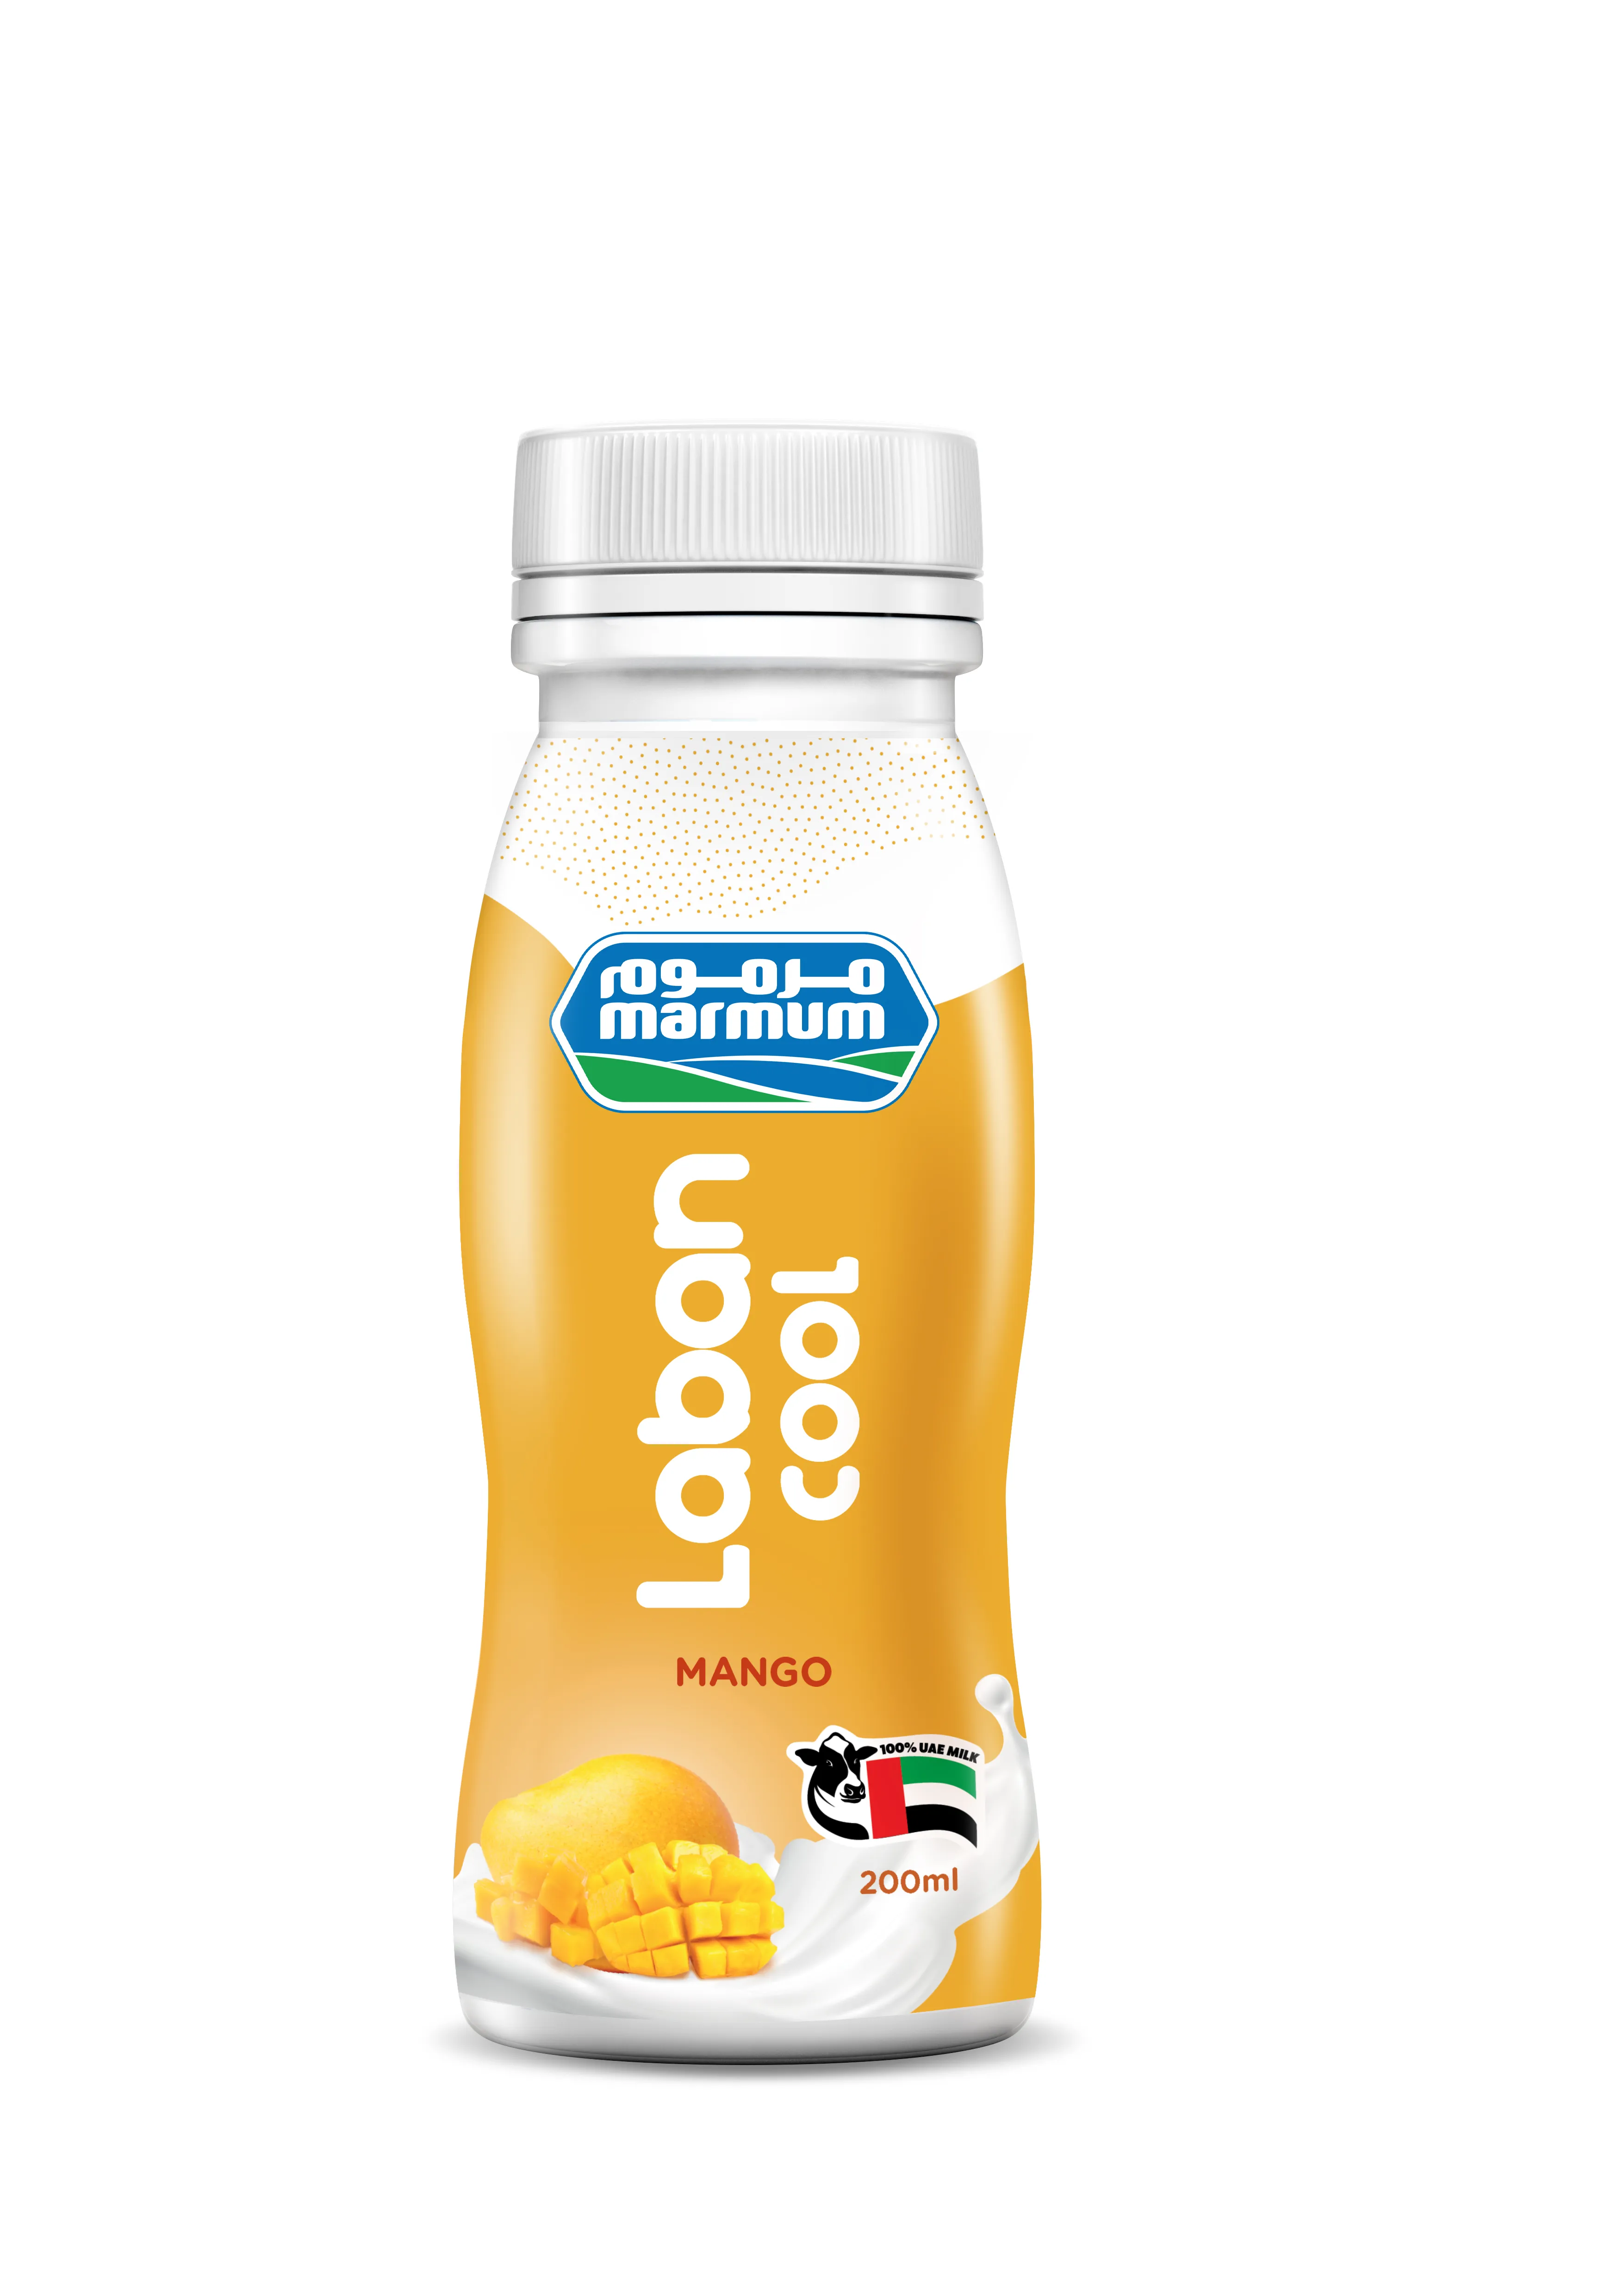 Laban Cool Mango 200ml. - Bottle